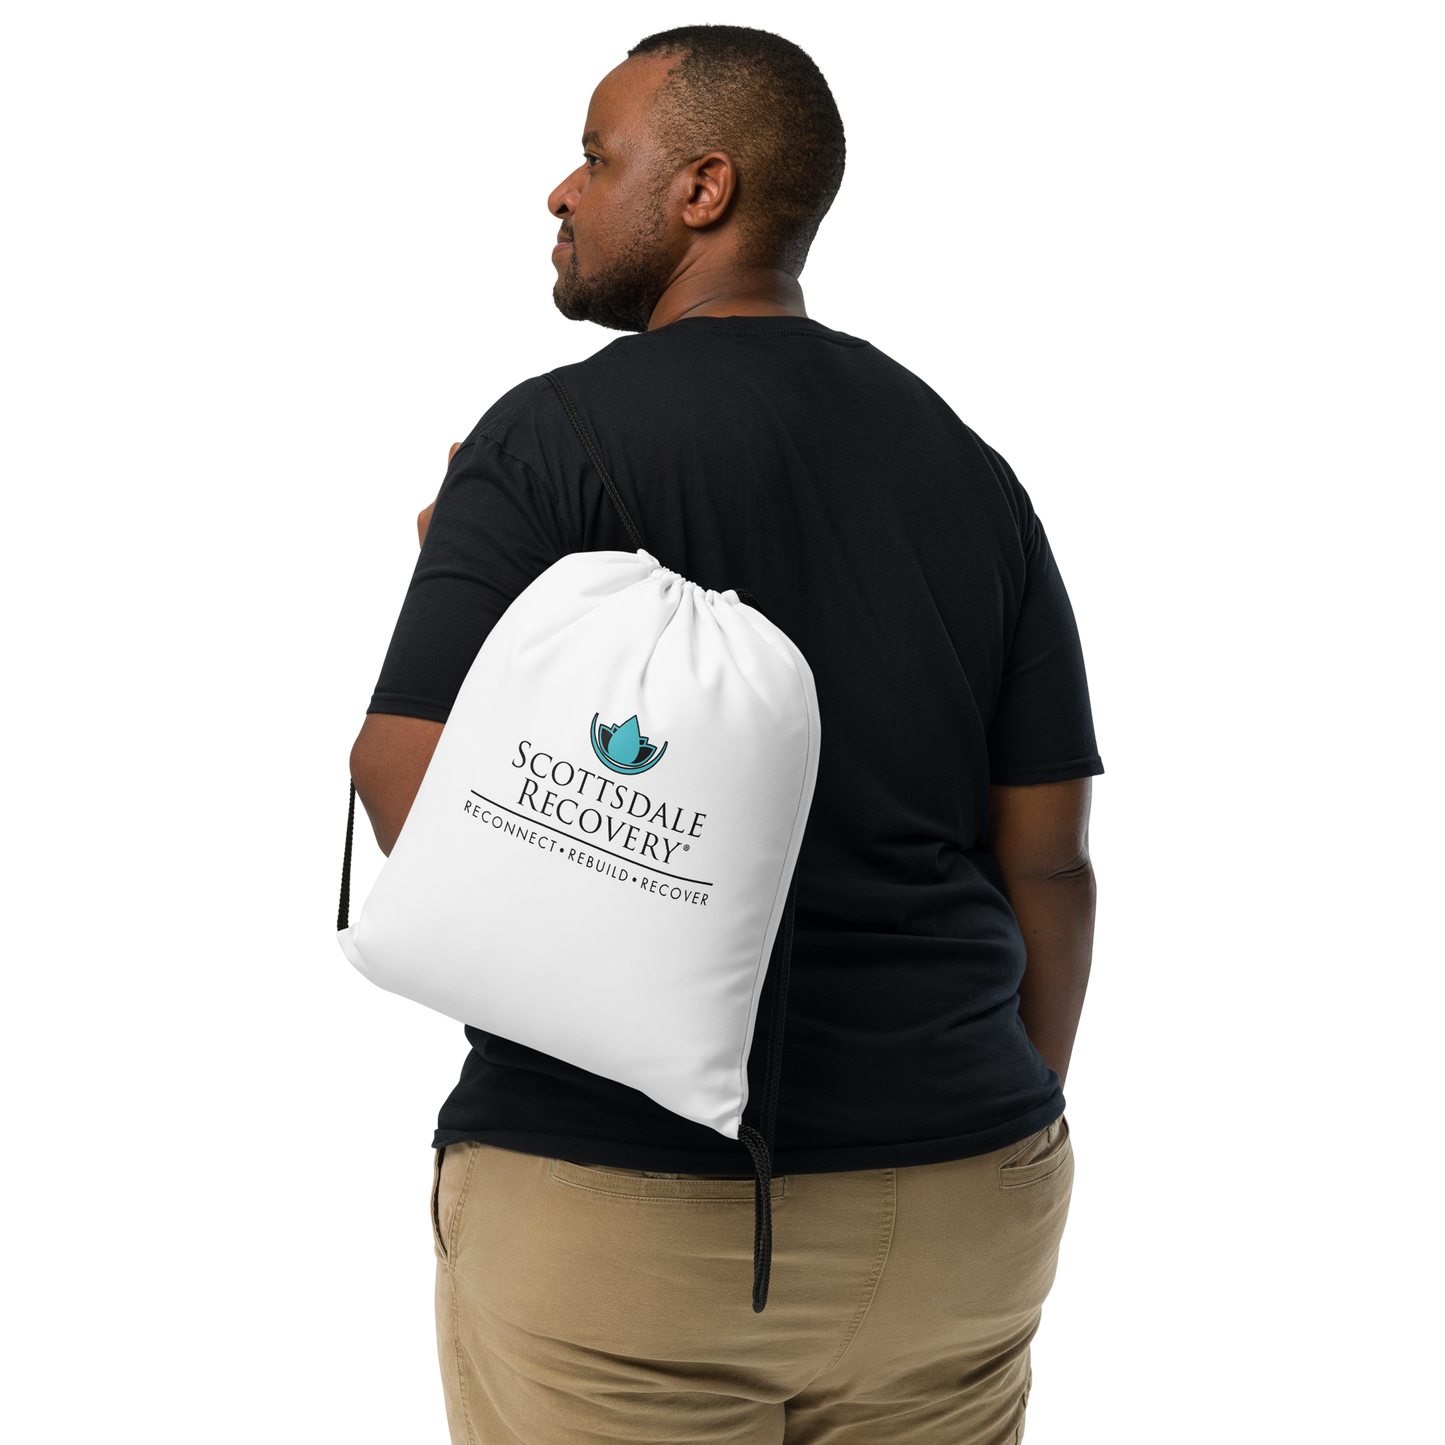 Scottsdale Recovery Logo Drawstring Bag